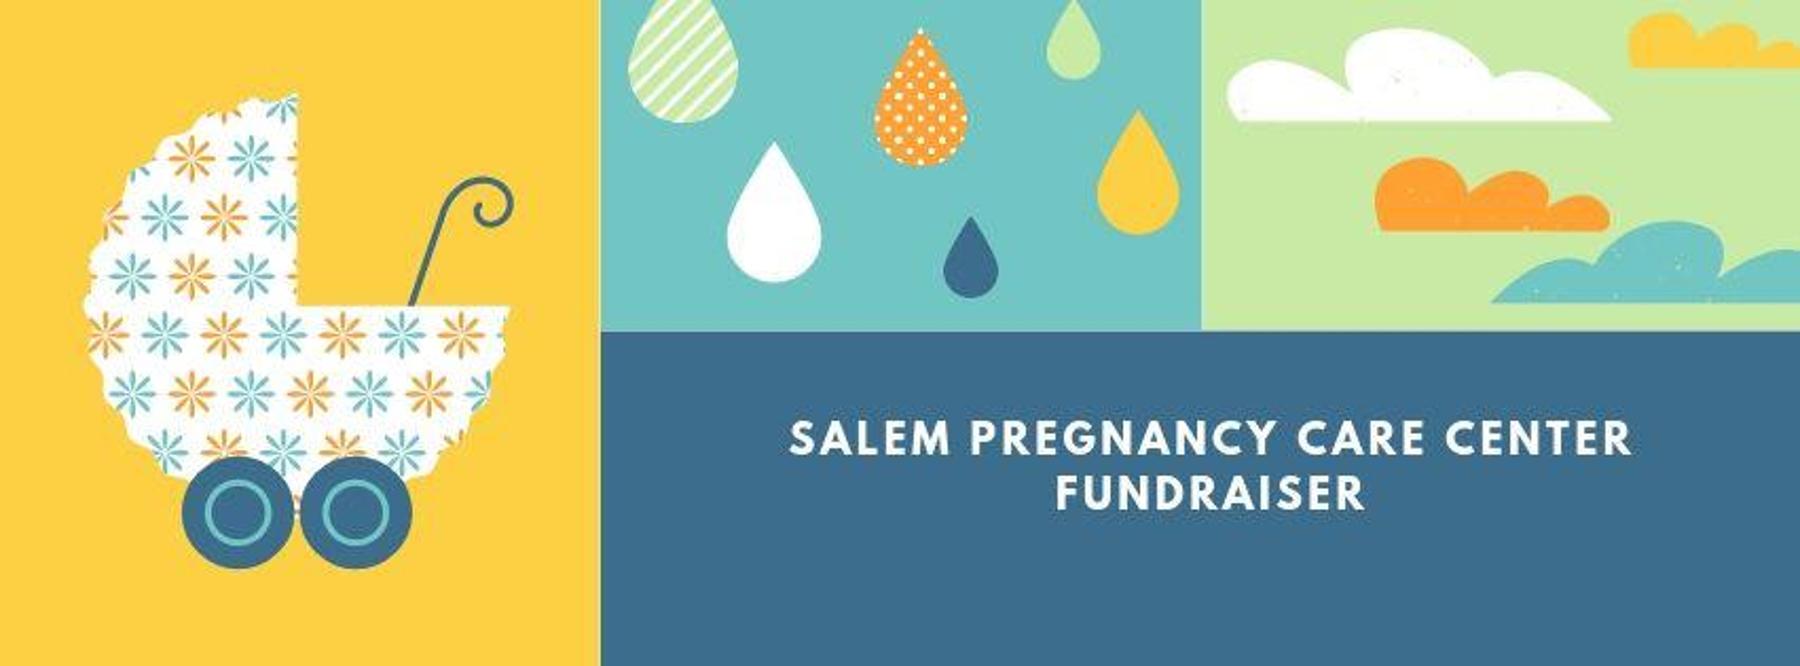 Salem Pregnancy Care Center Fundraiser